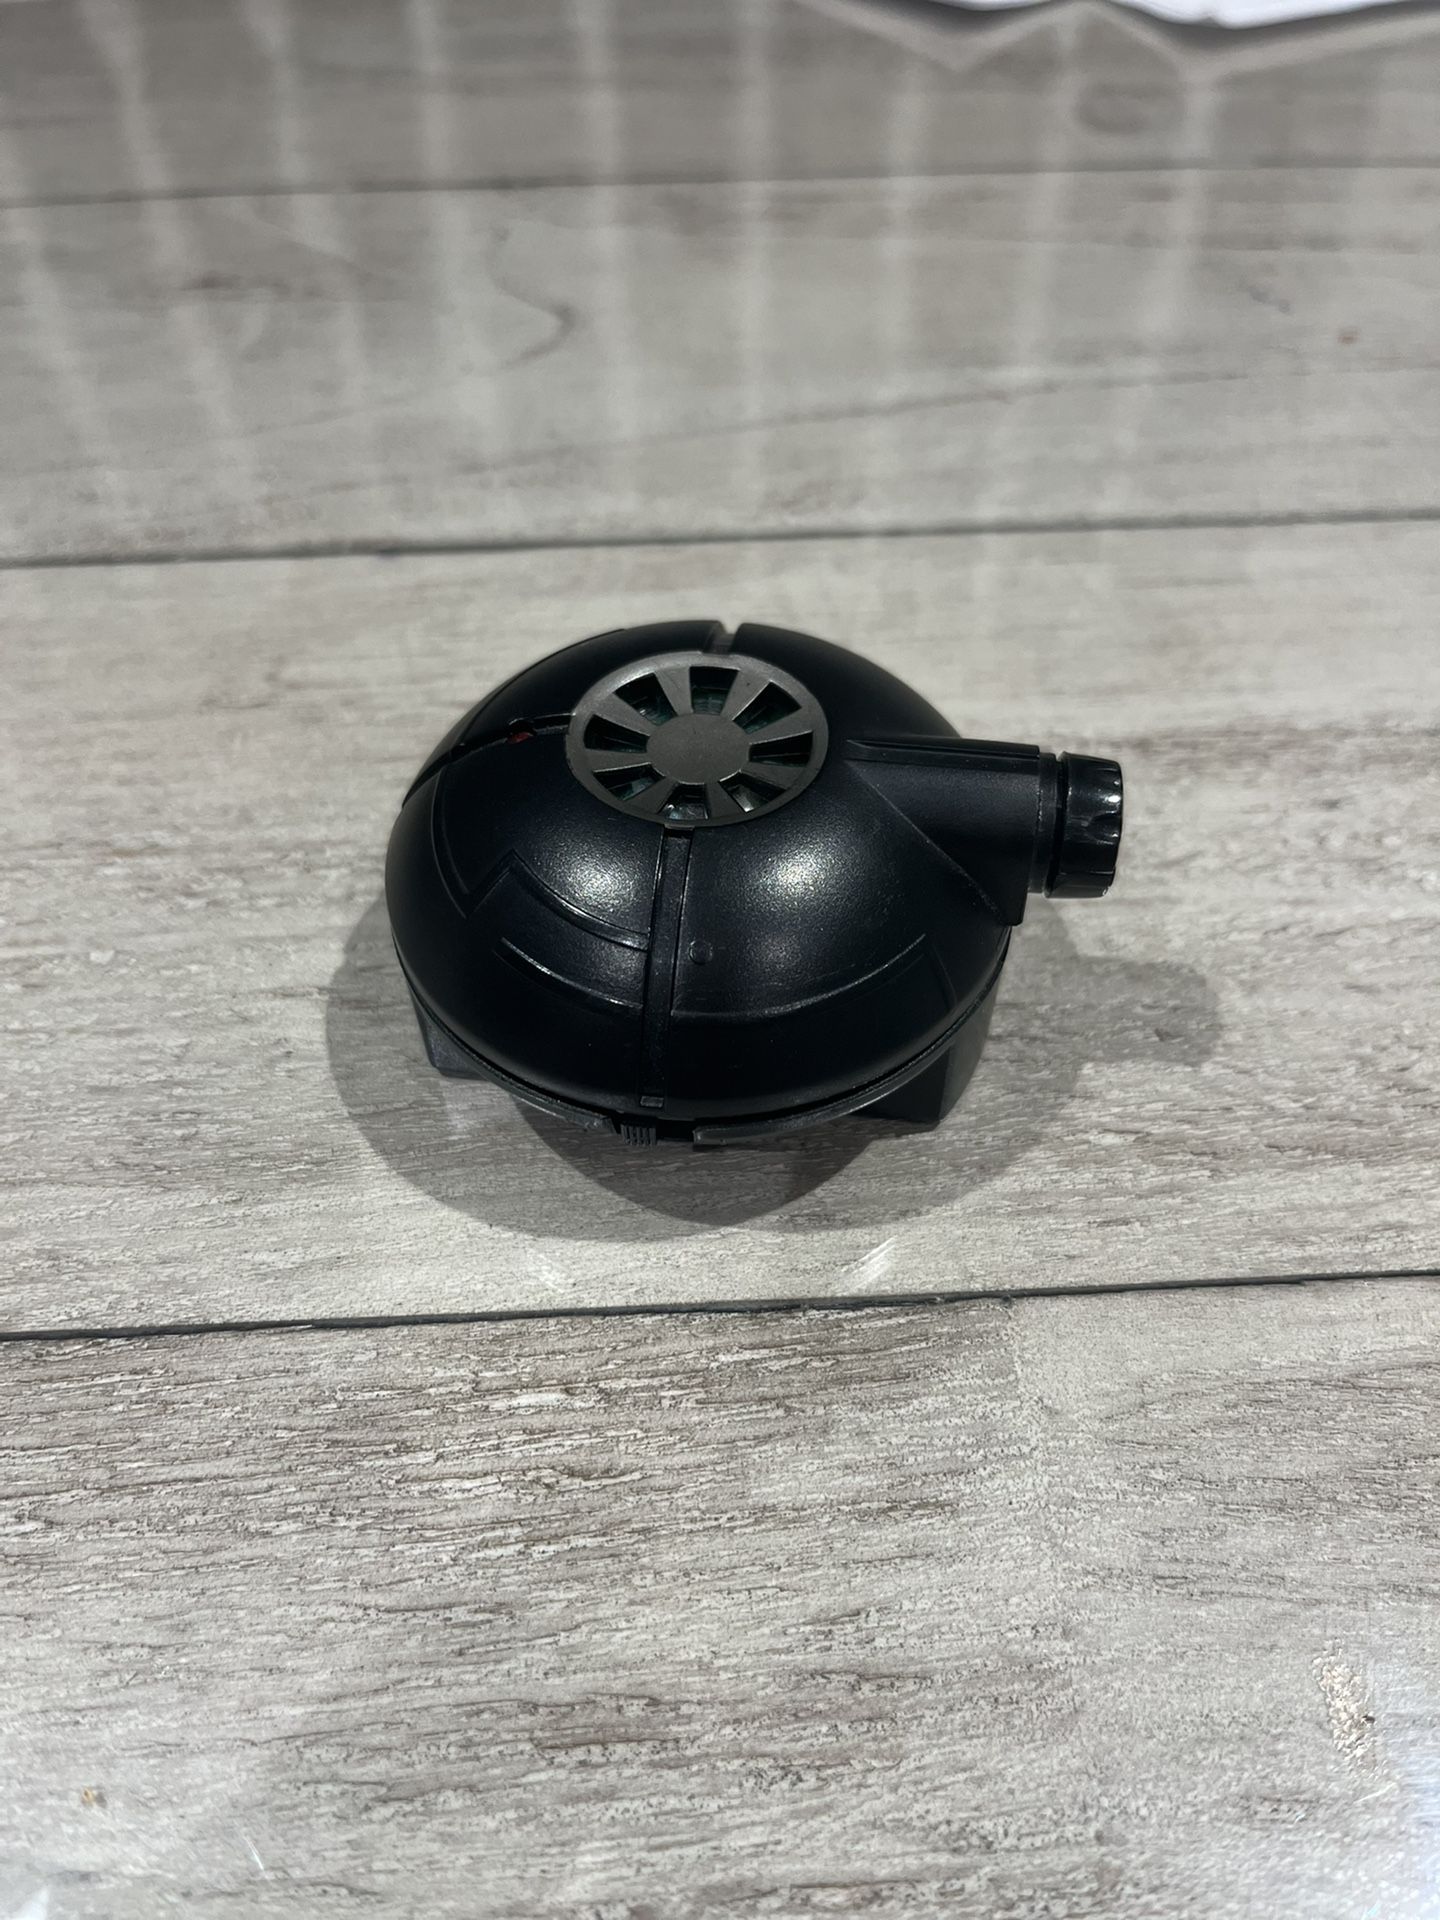 Spy Gear Motion Detector Alarm Toy